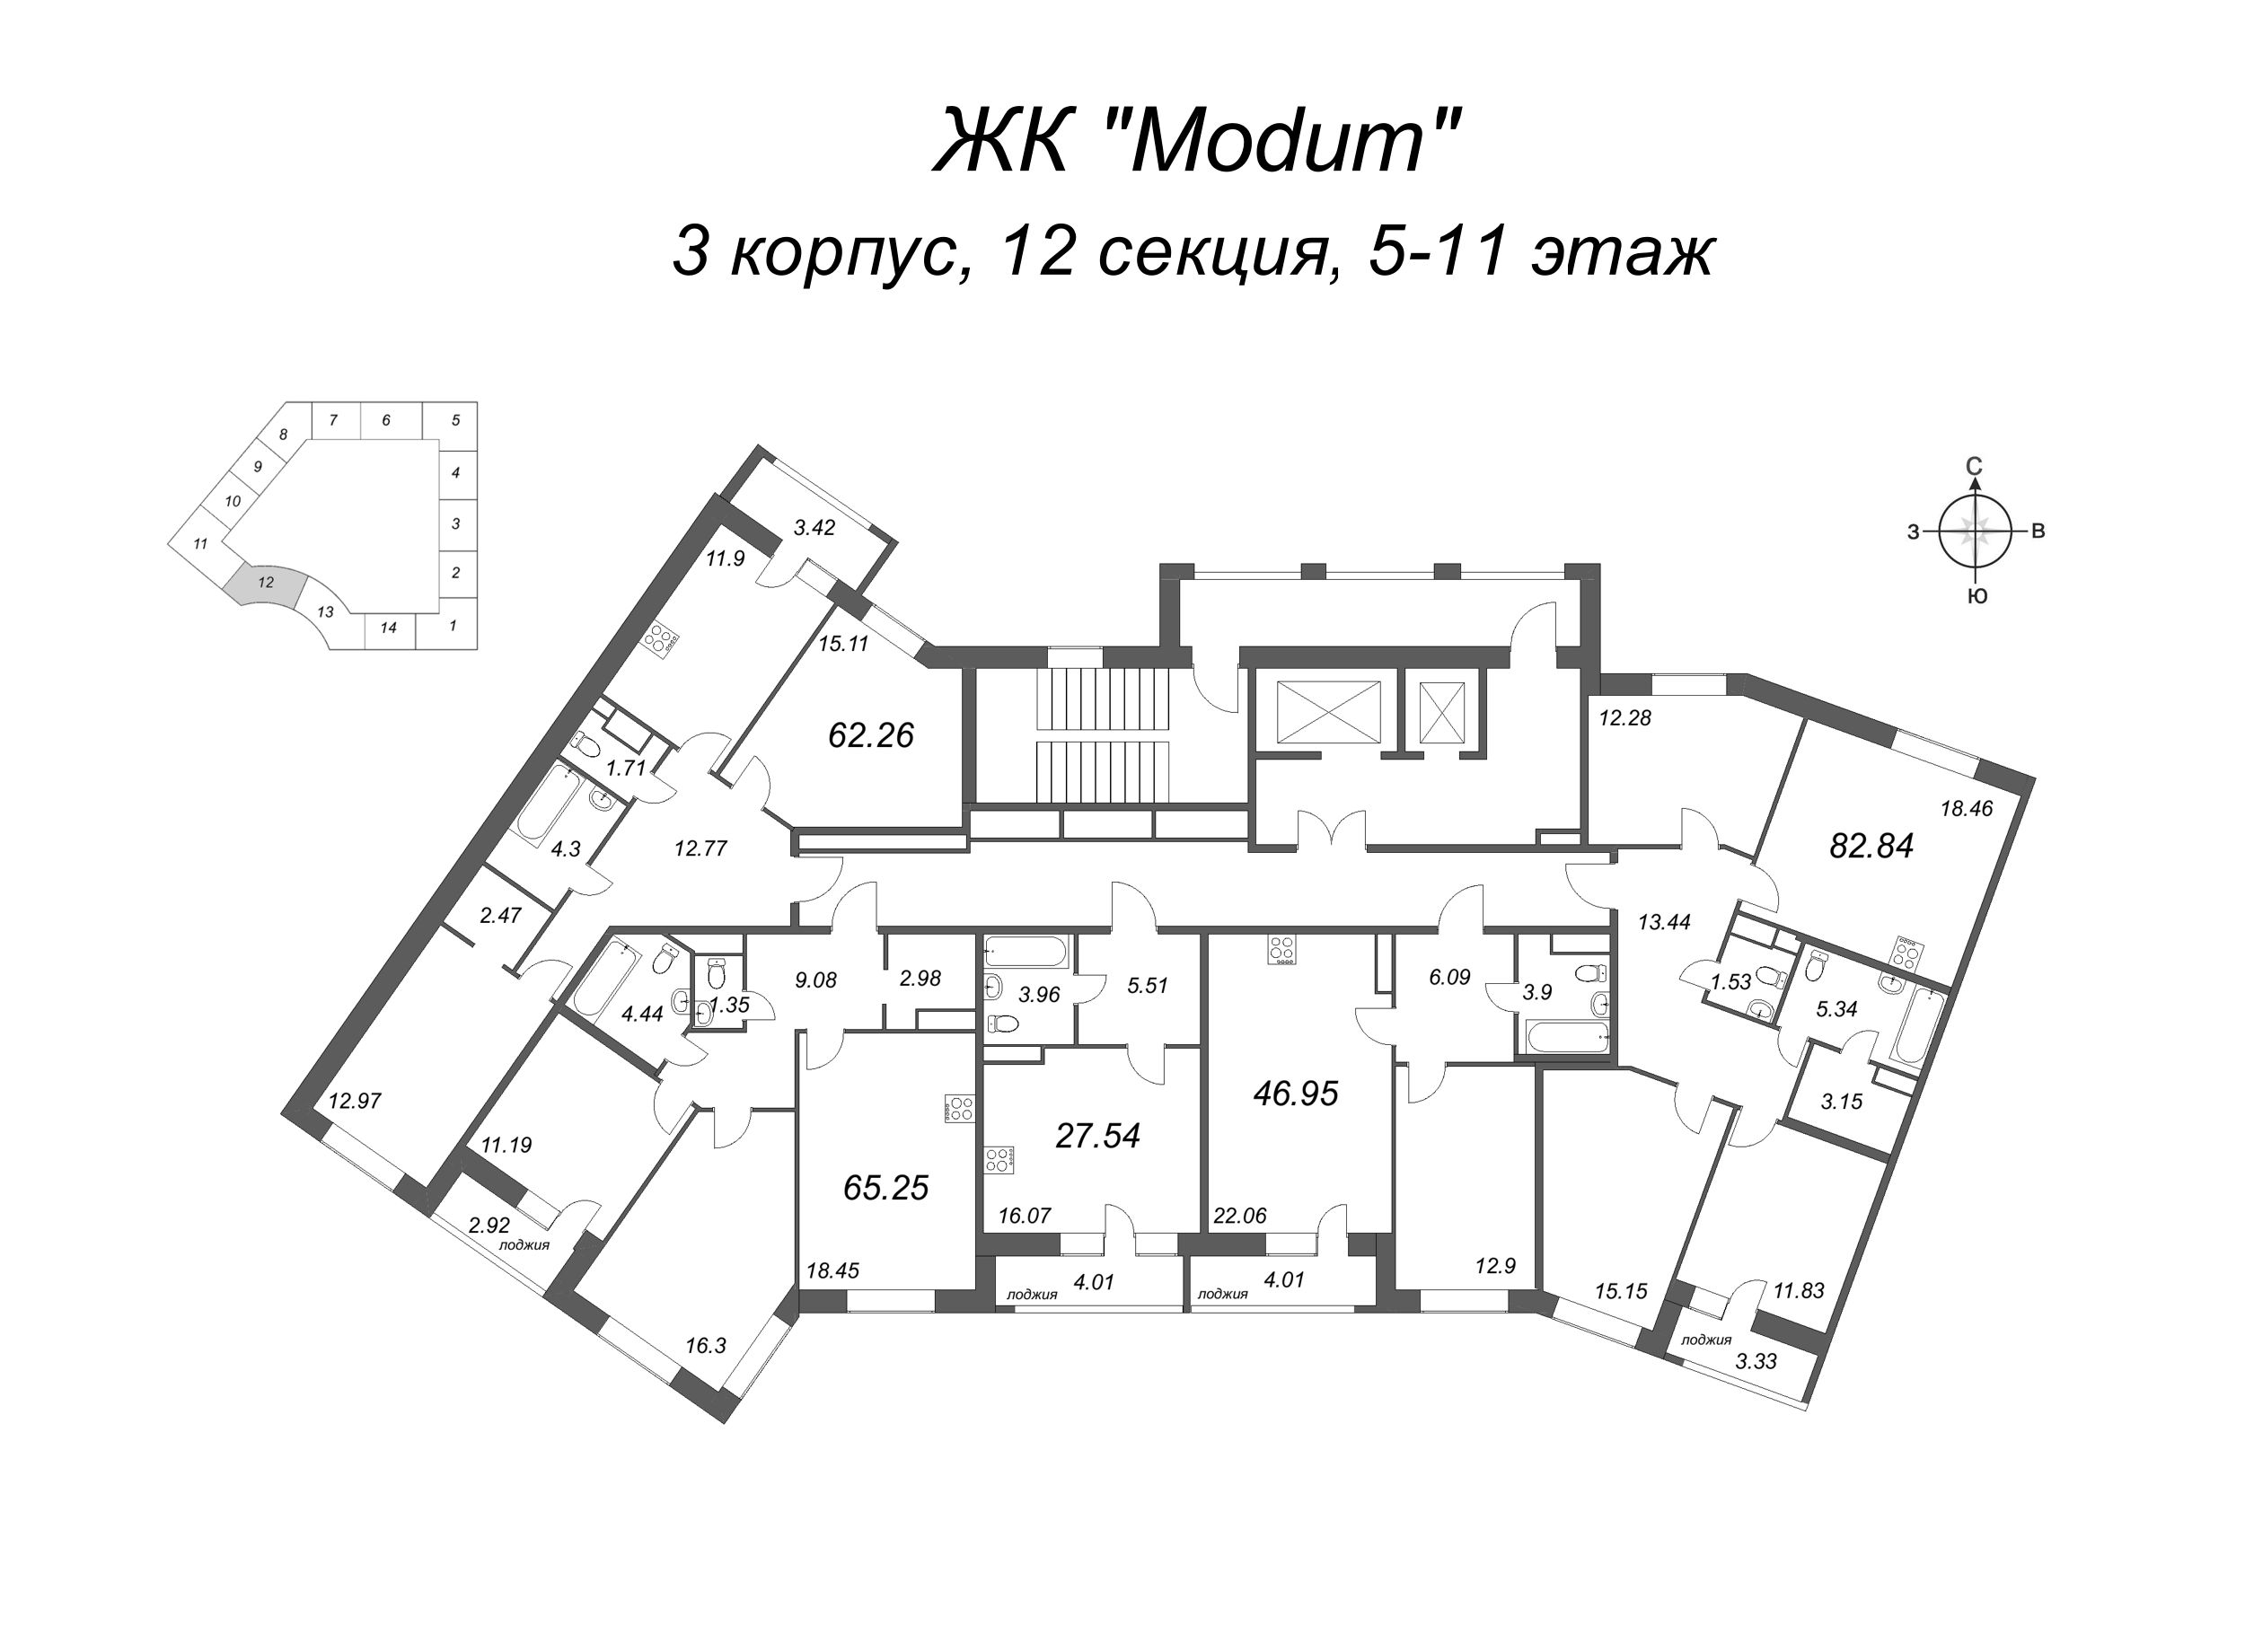 2-комнатная (Евро) квартира, 46.95 м² - планировка этажа